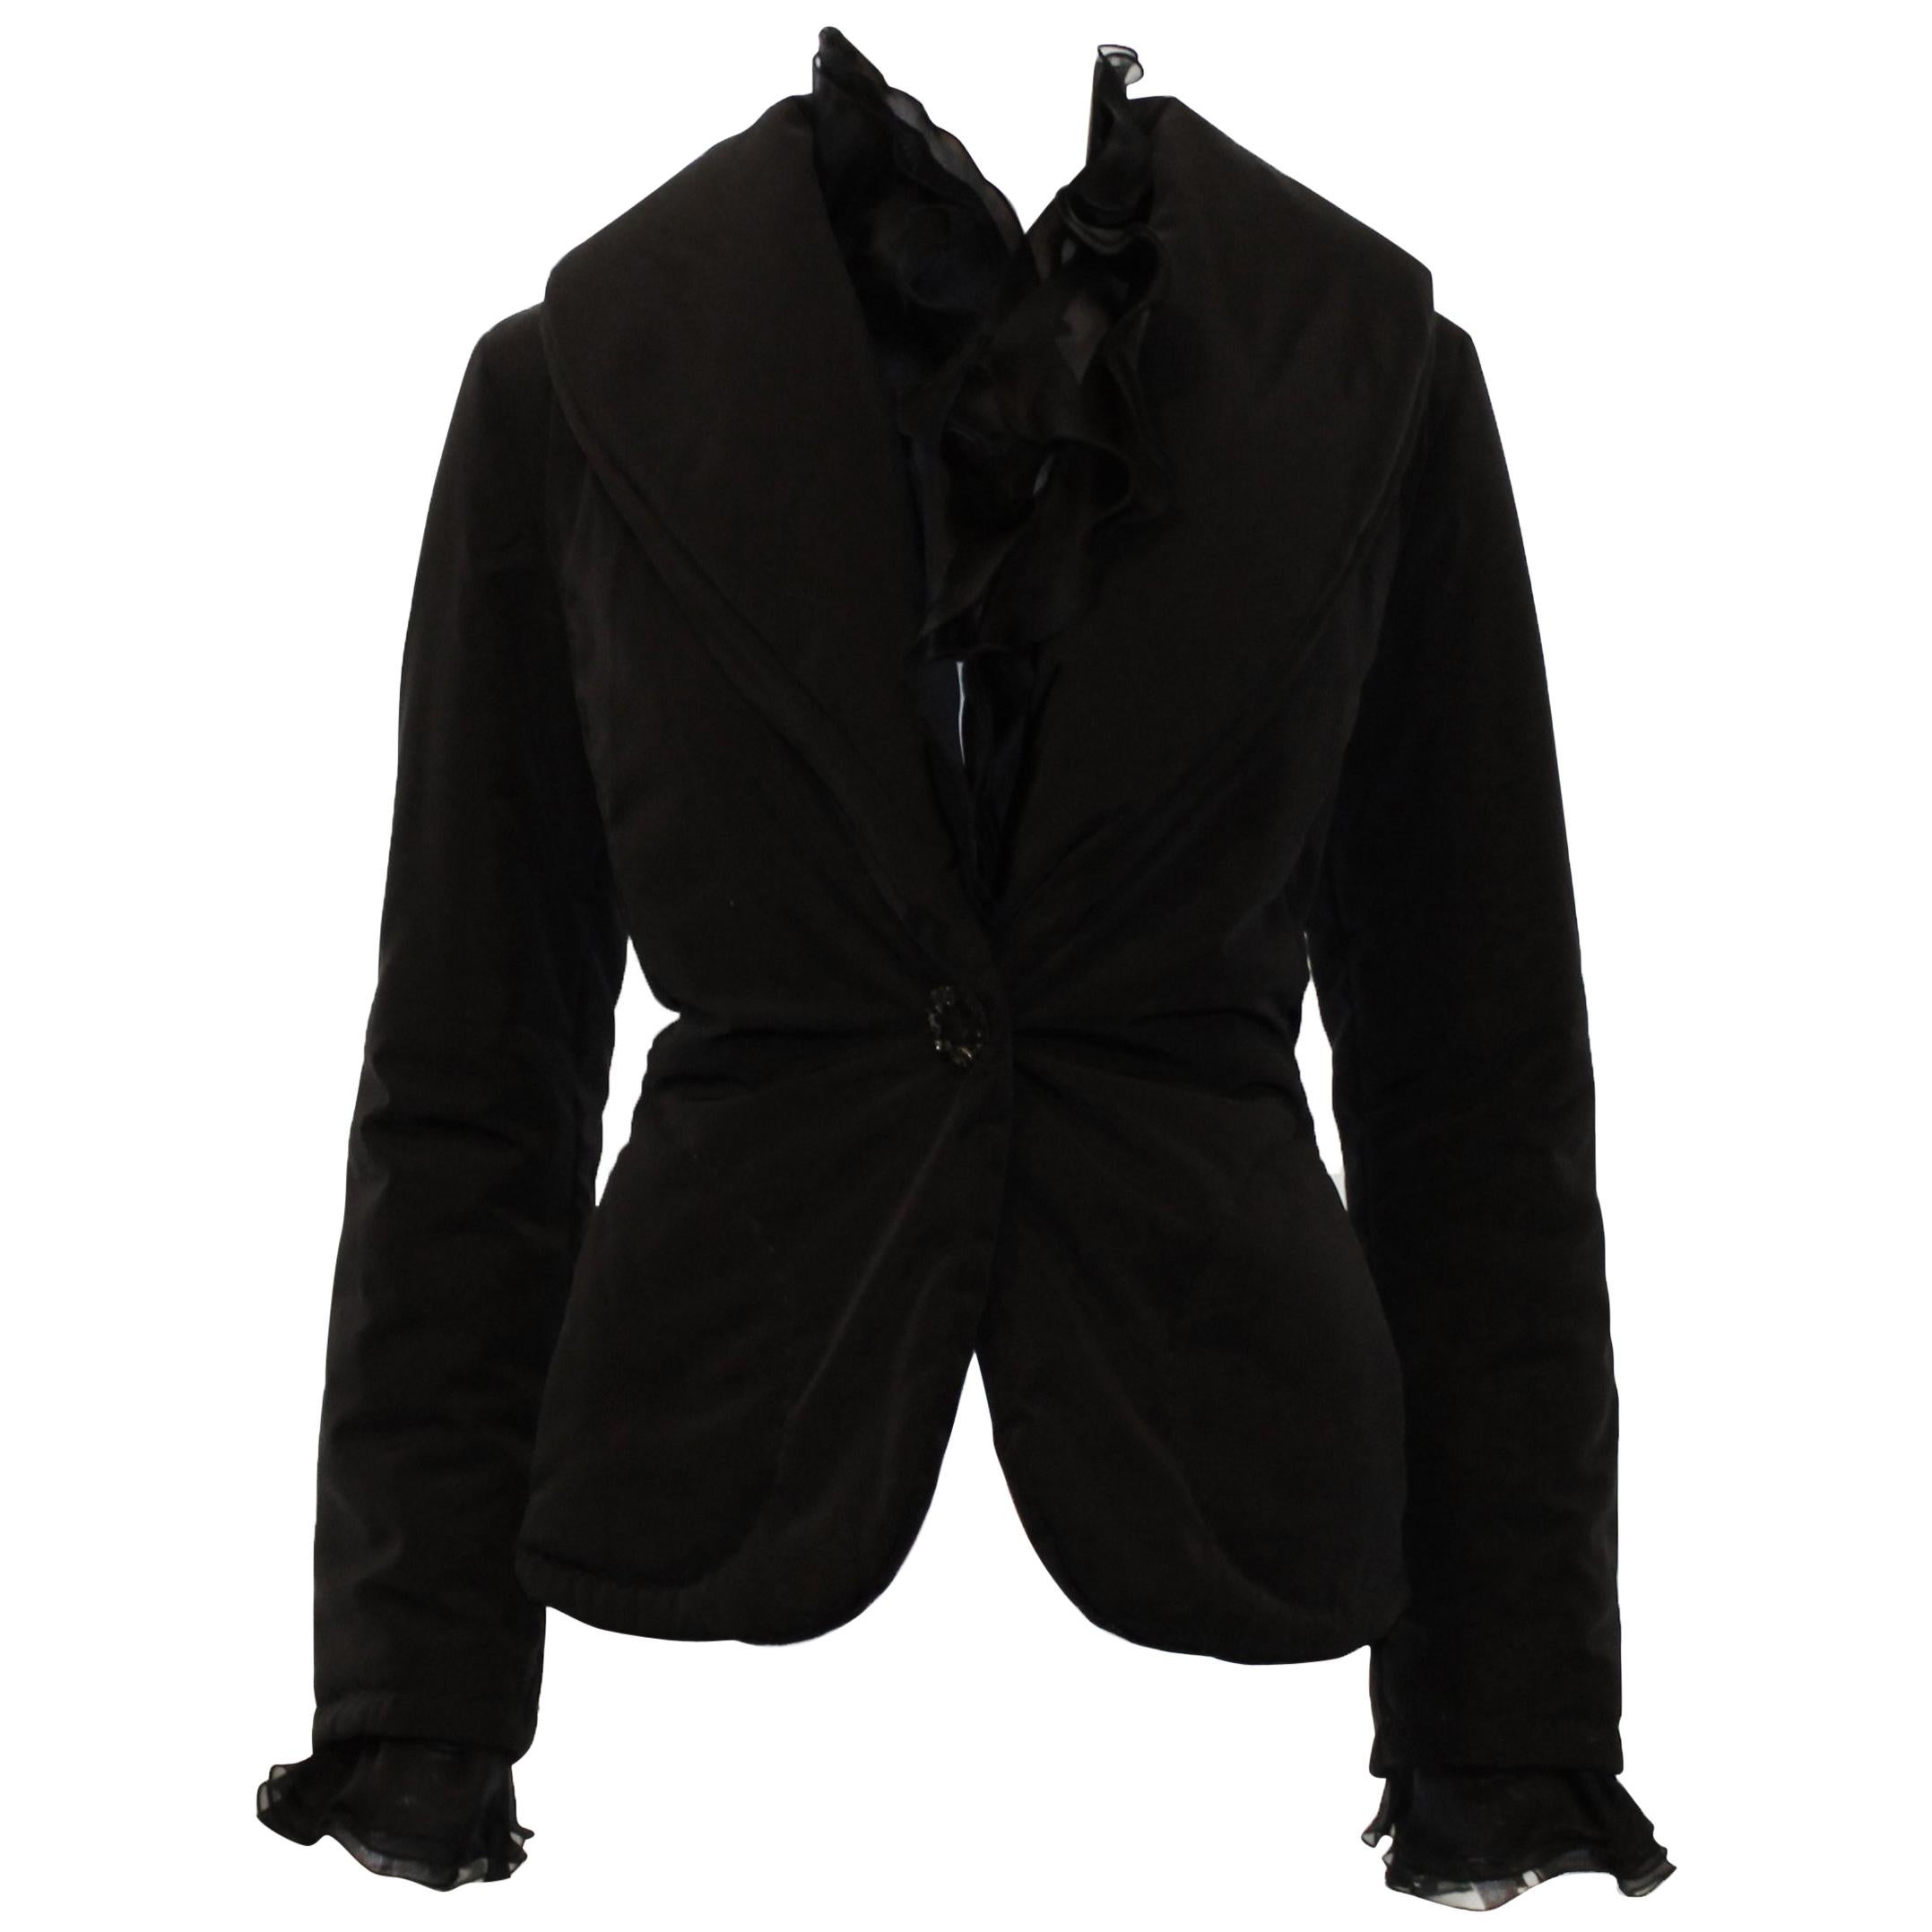 Valentino Black Puffer Jacket with Ruffle Collar & Cuffs